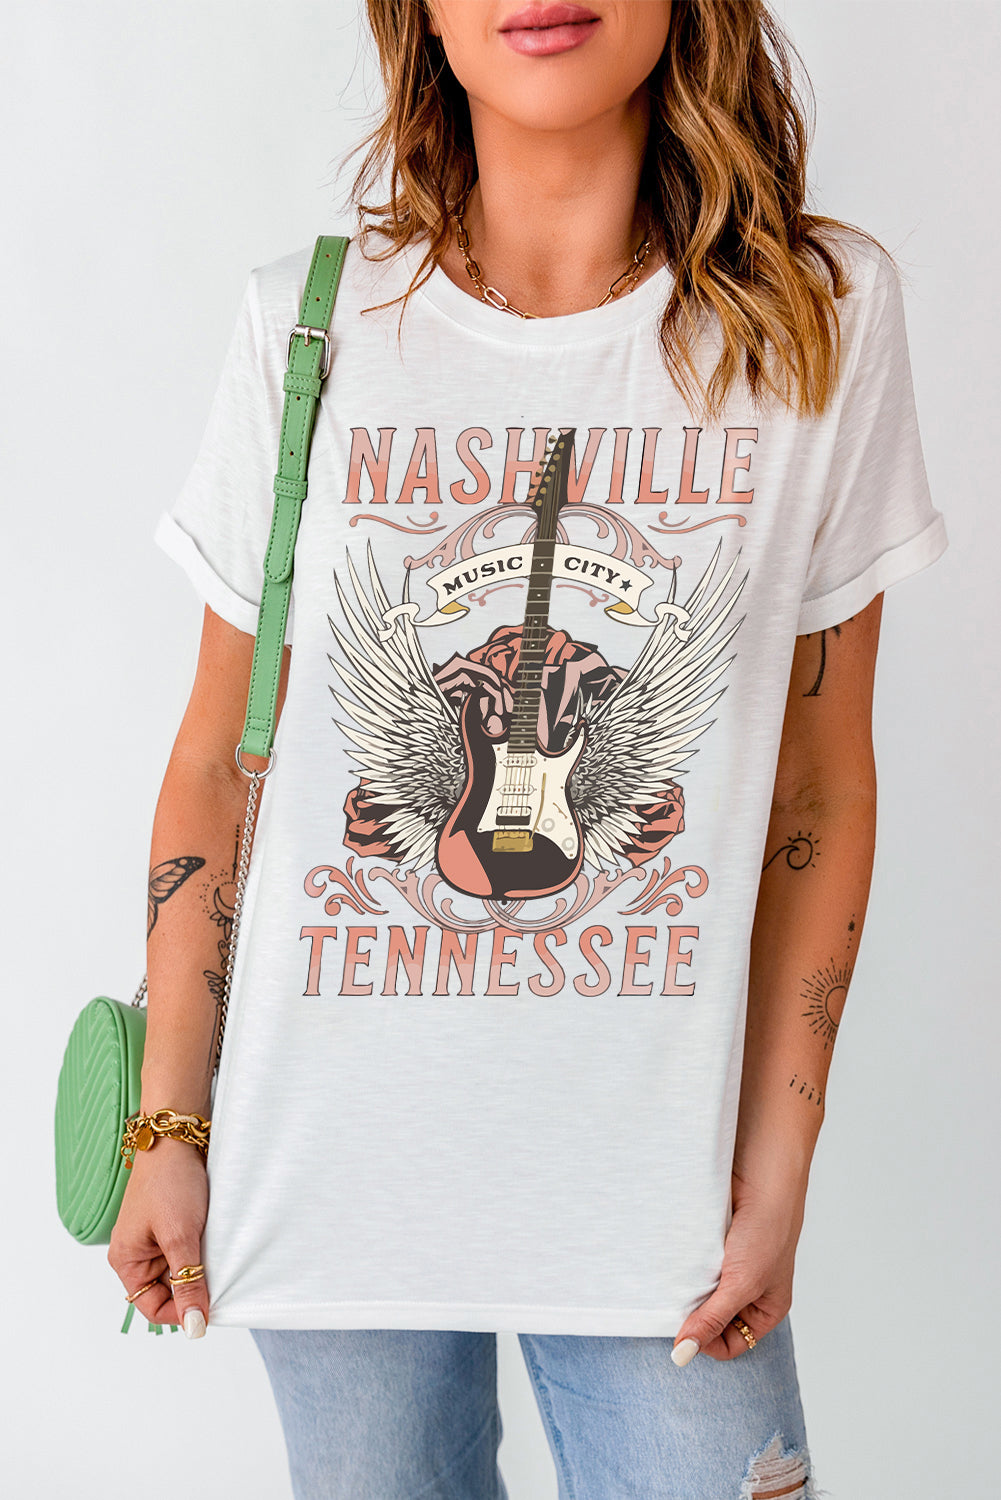 NASHVILLE TENNESSEE T-Shirt - ONLINE EXCLUSIVE